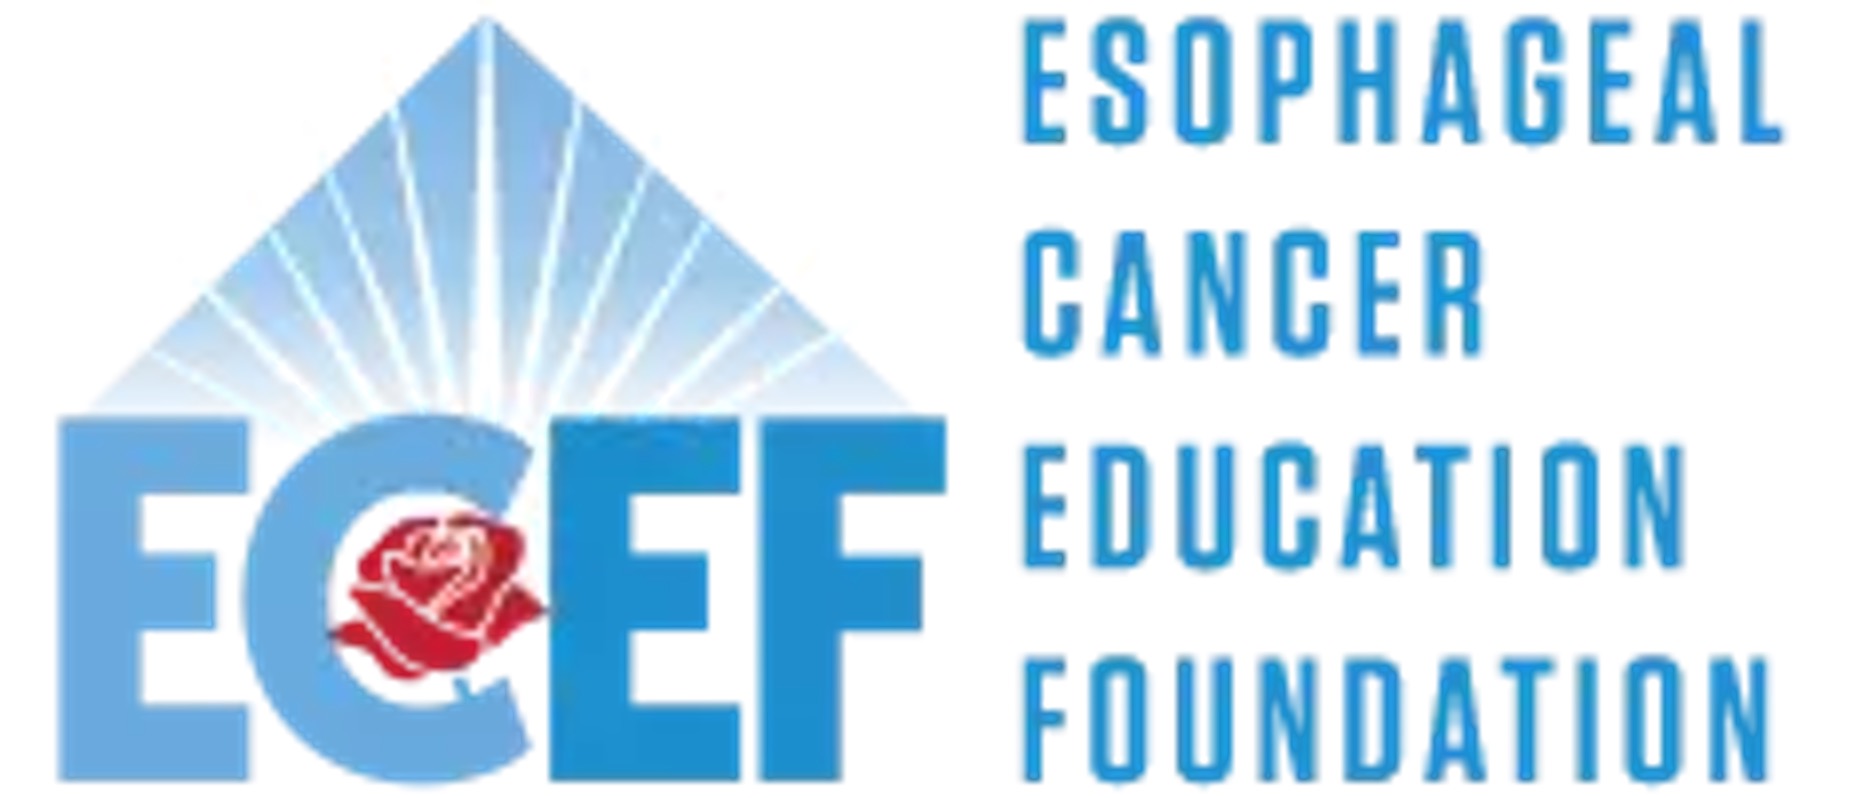 ESOPHAGEAL CANCER EDUCATION FOUNDATION INC